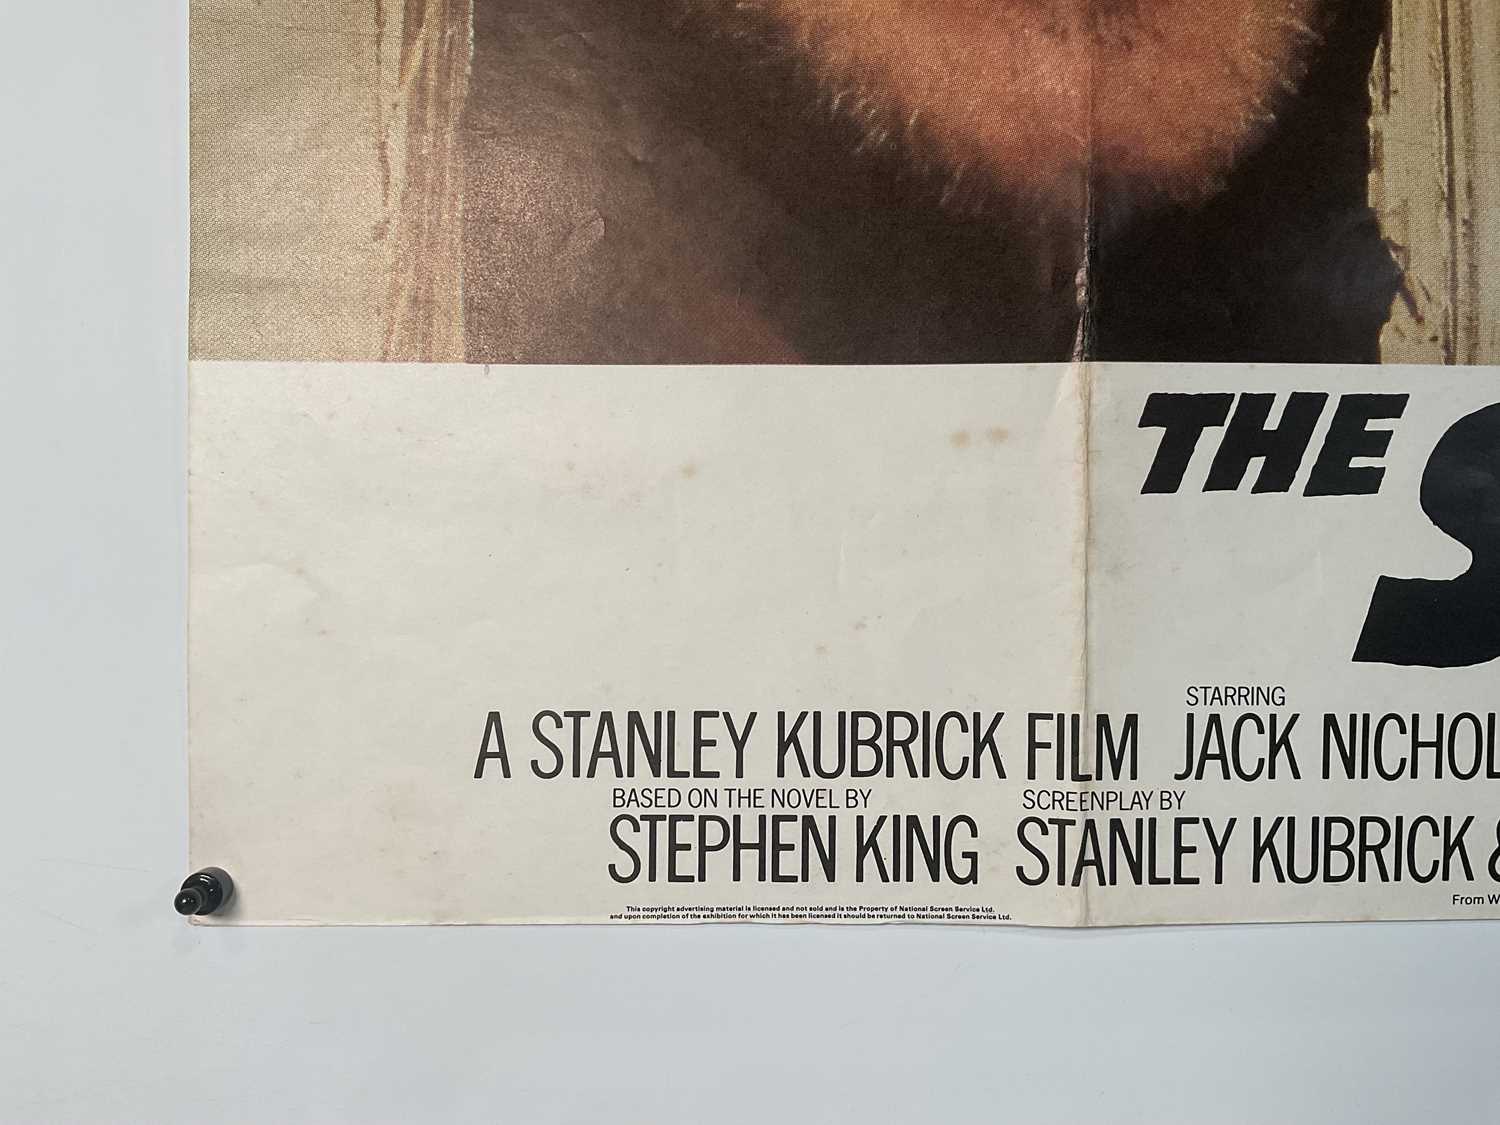 THE SHINING (1980) UK quad film poster, Stanley Kubrick classic horror, folded - Image 2 of 6